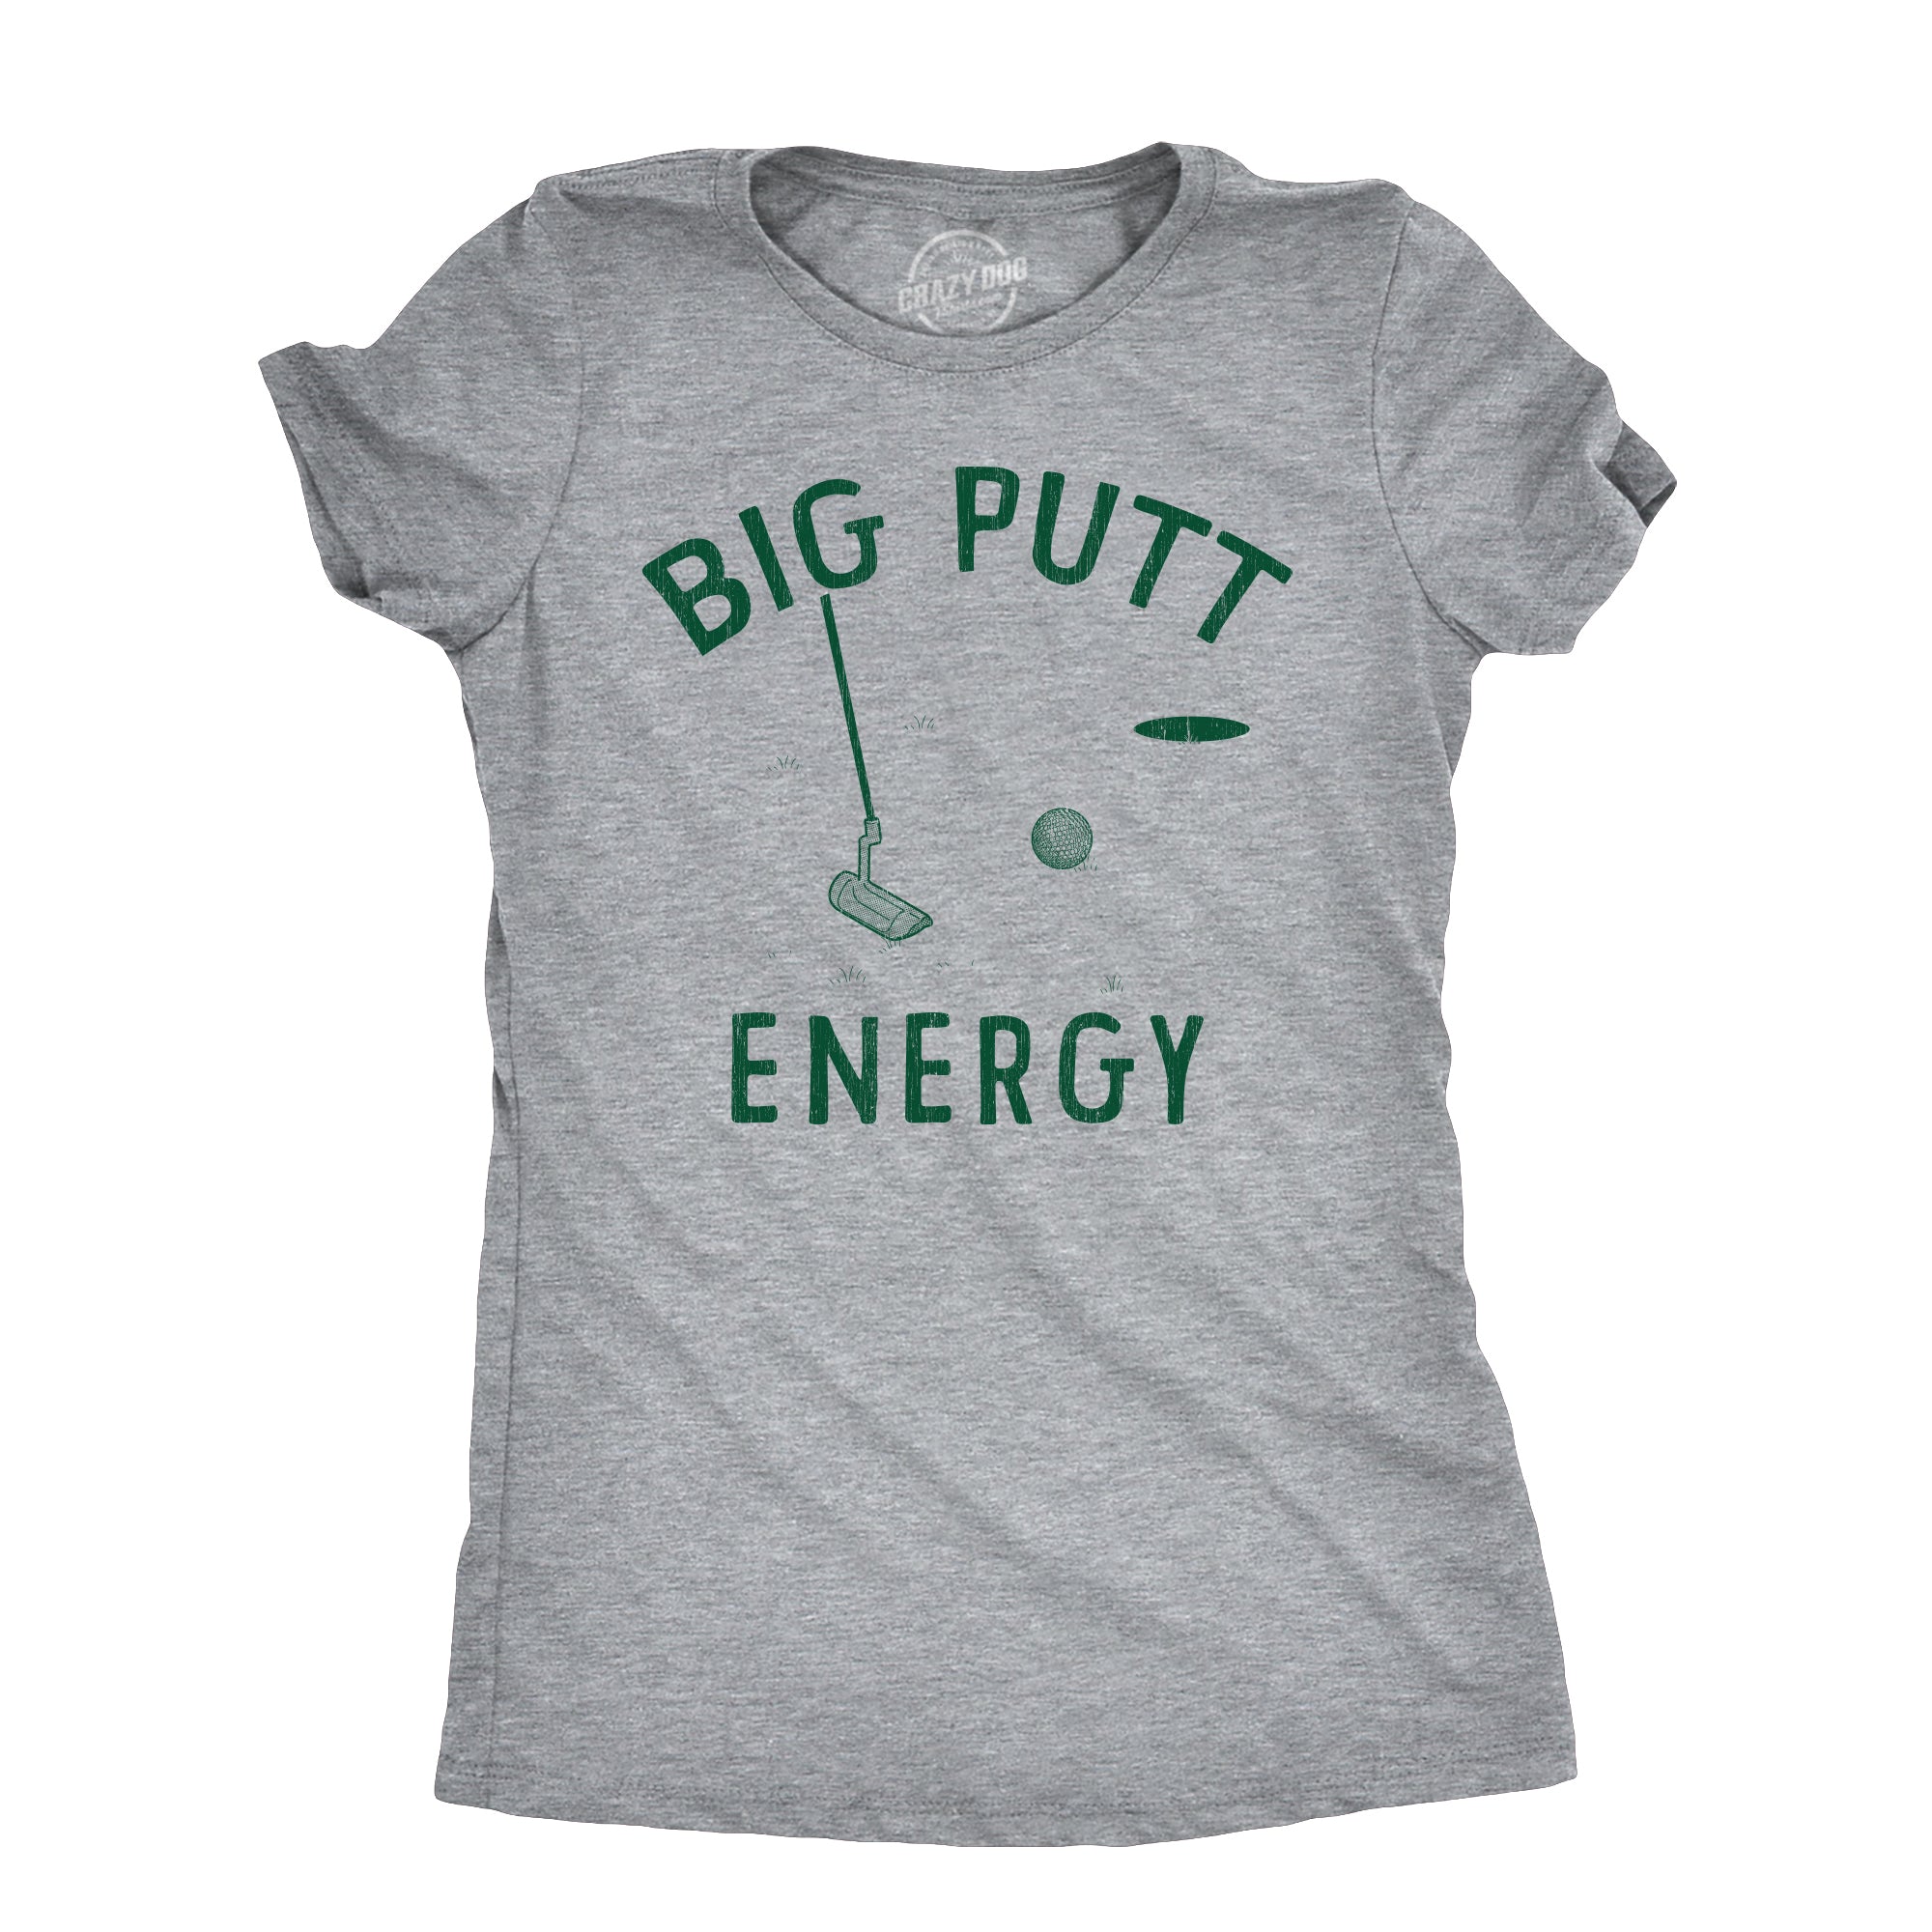 Funny Light Heather Grey - PUTT Big Putt Energy Womens T Shirt Nerdy Golf sarcastic Tee